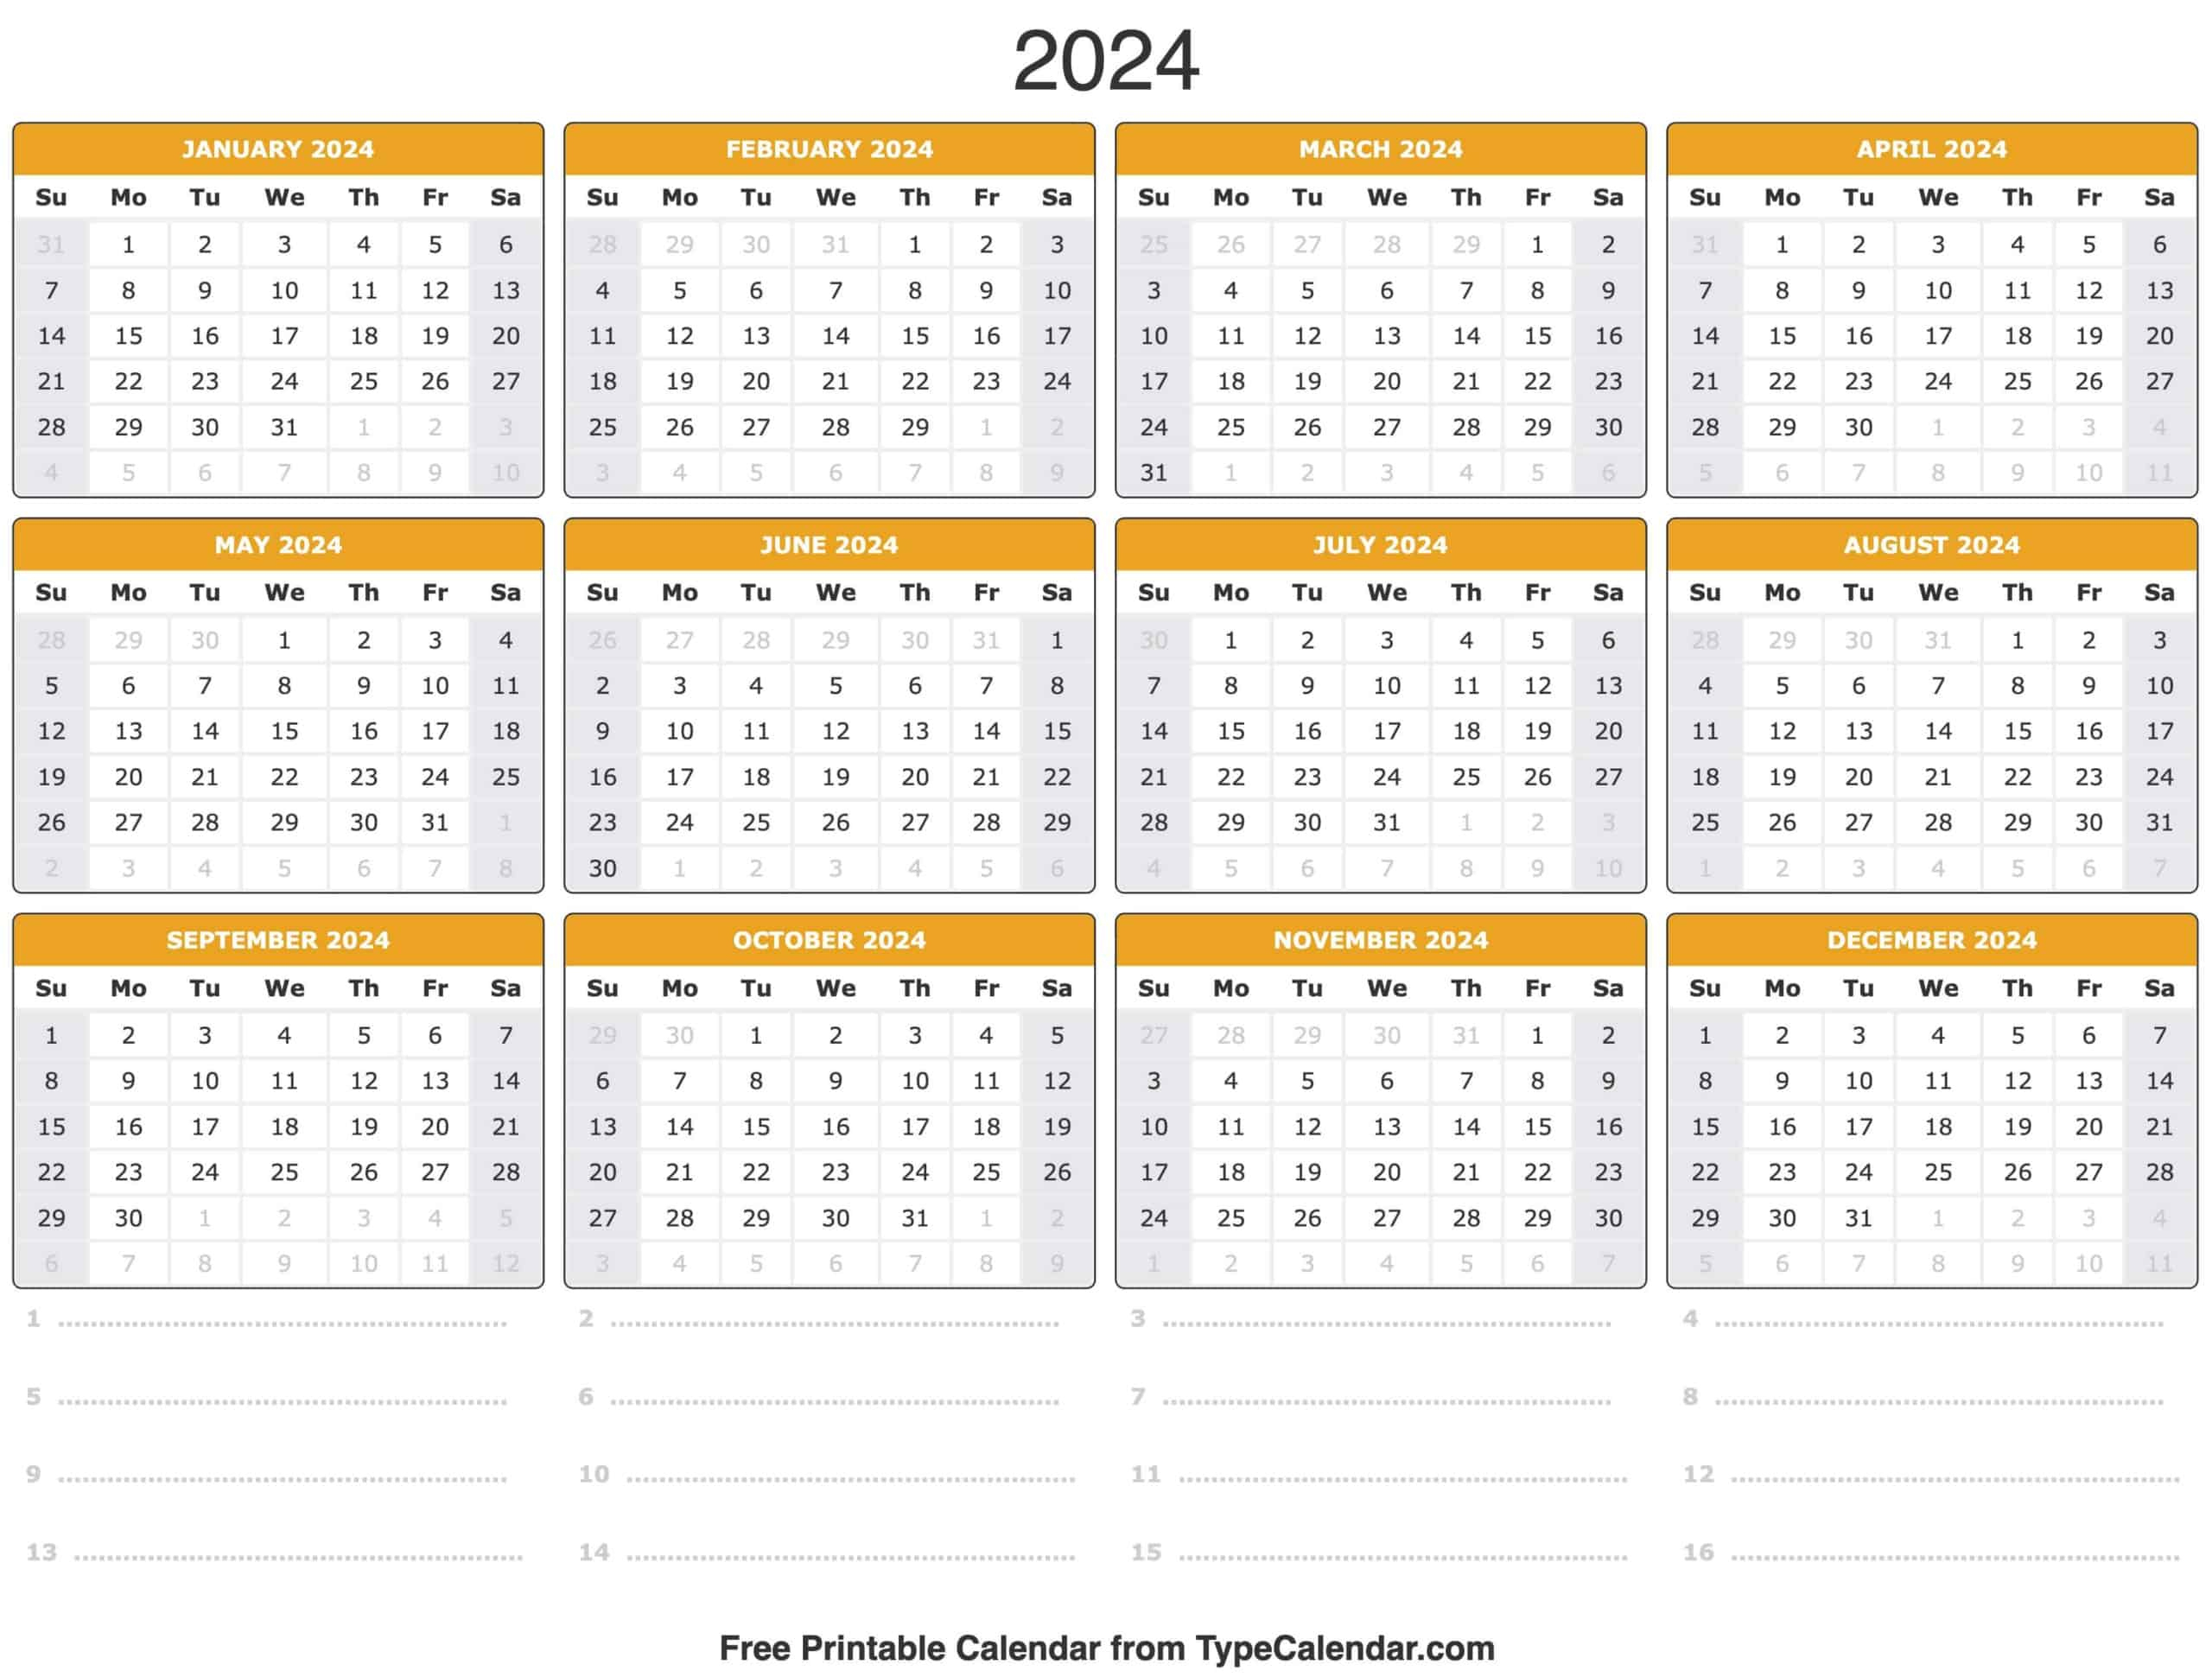 2024 Calendar: Free Printable Calendar With Holidays | Printable Calendar 2024 All Months